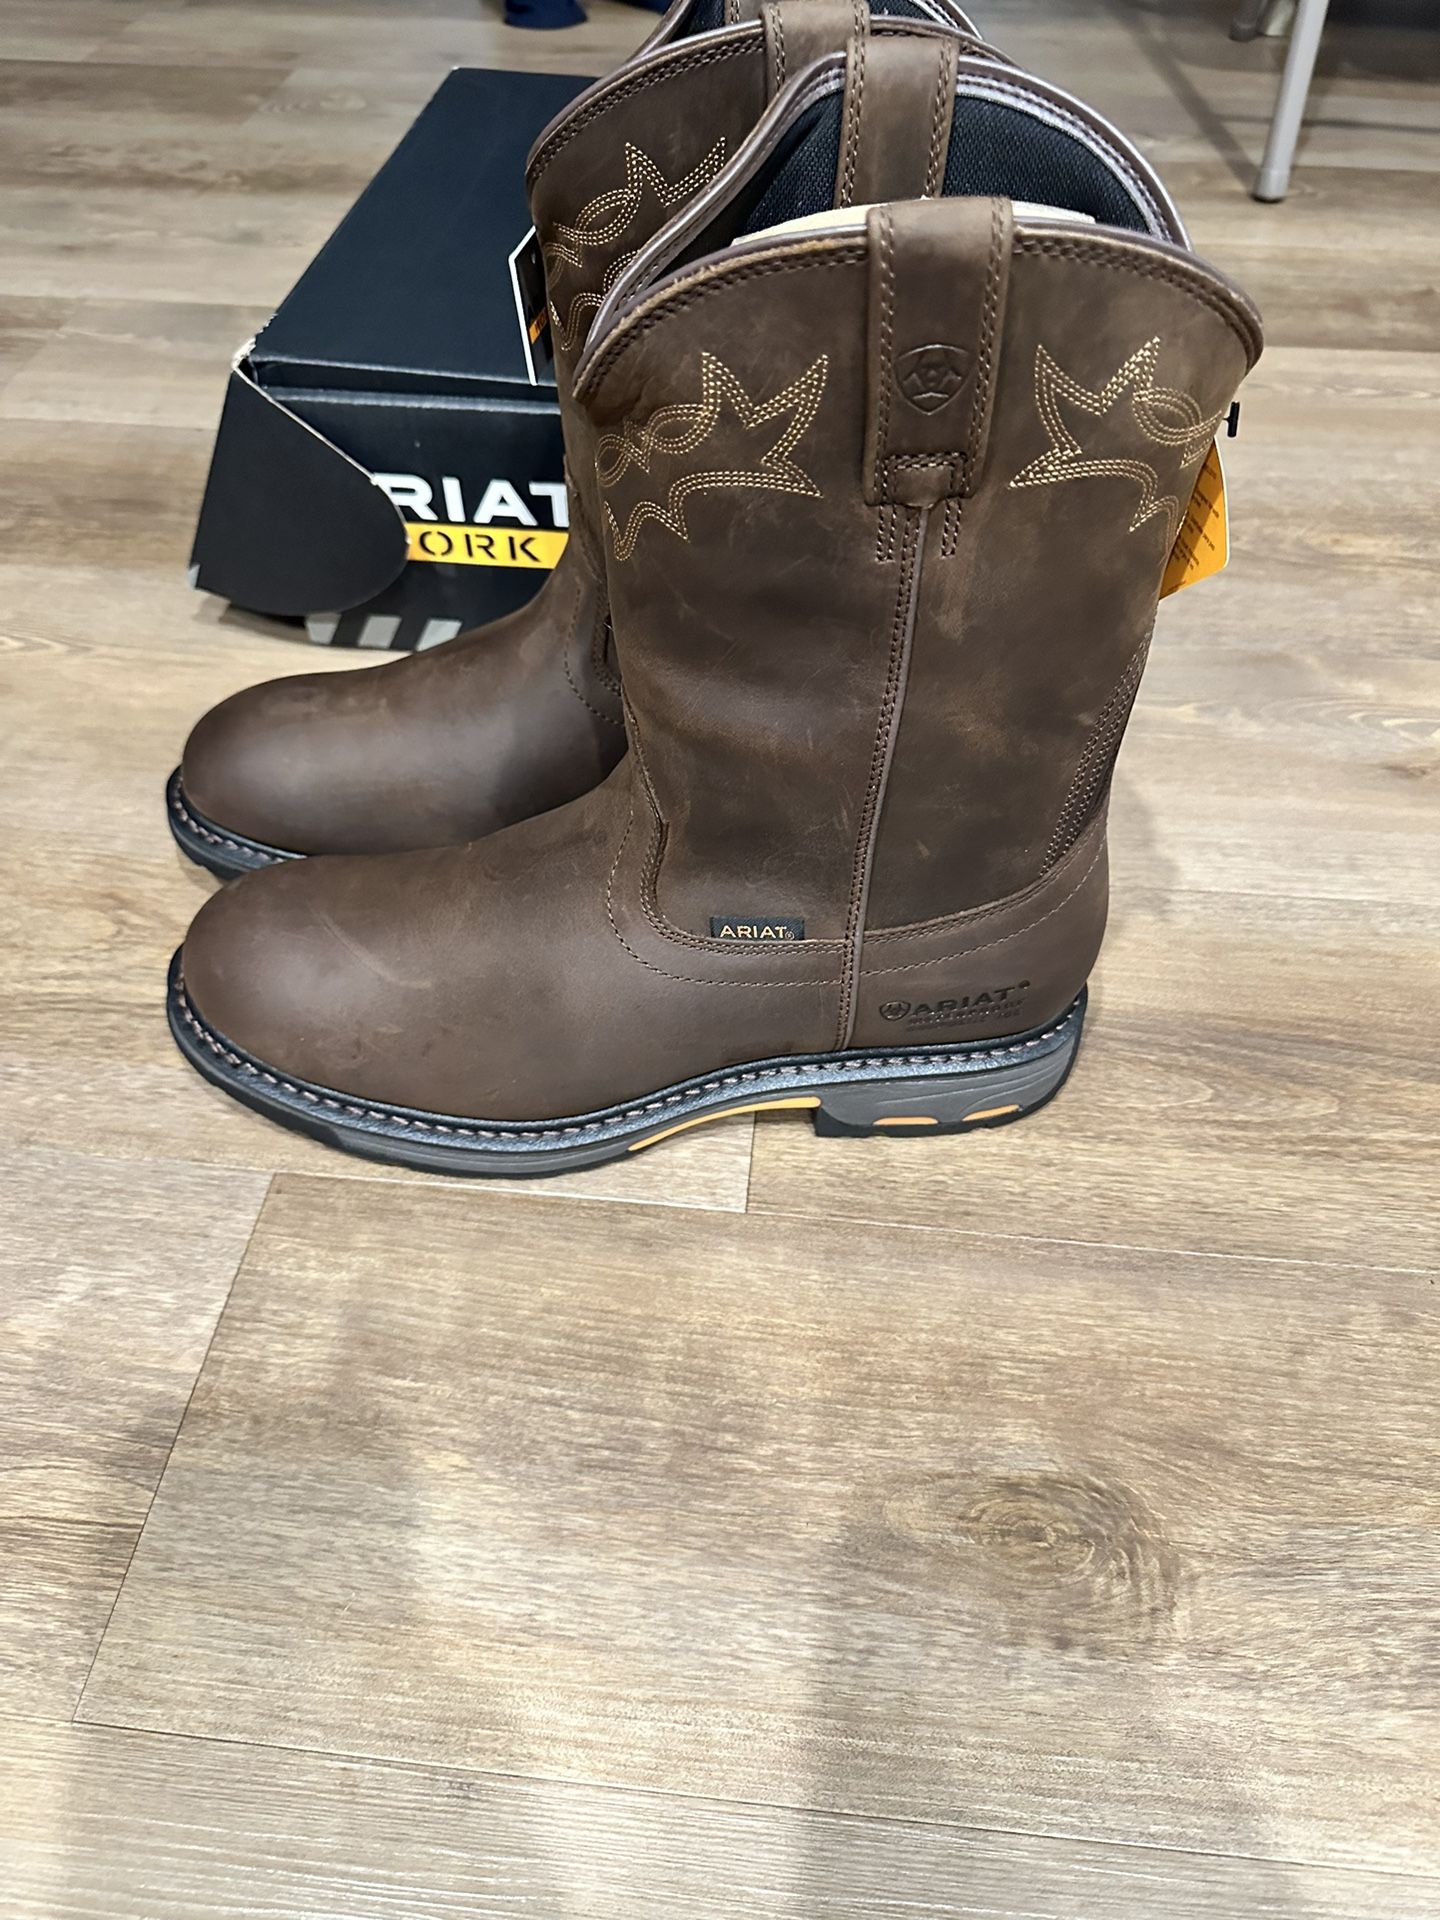 New Ariat Workhog Boots